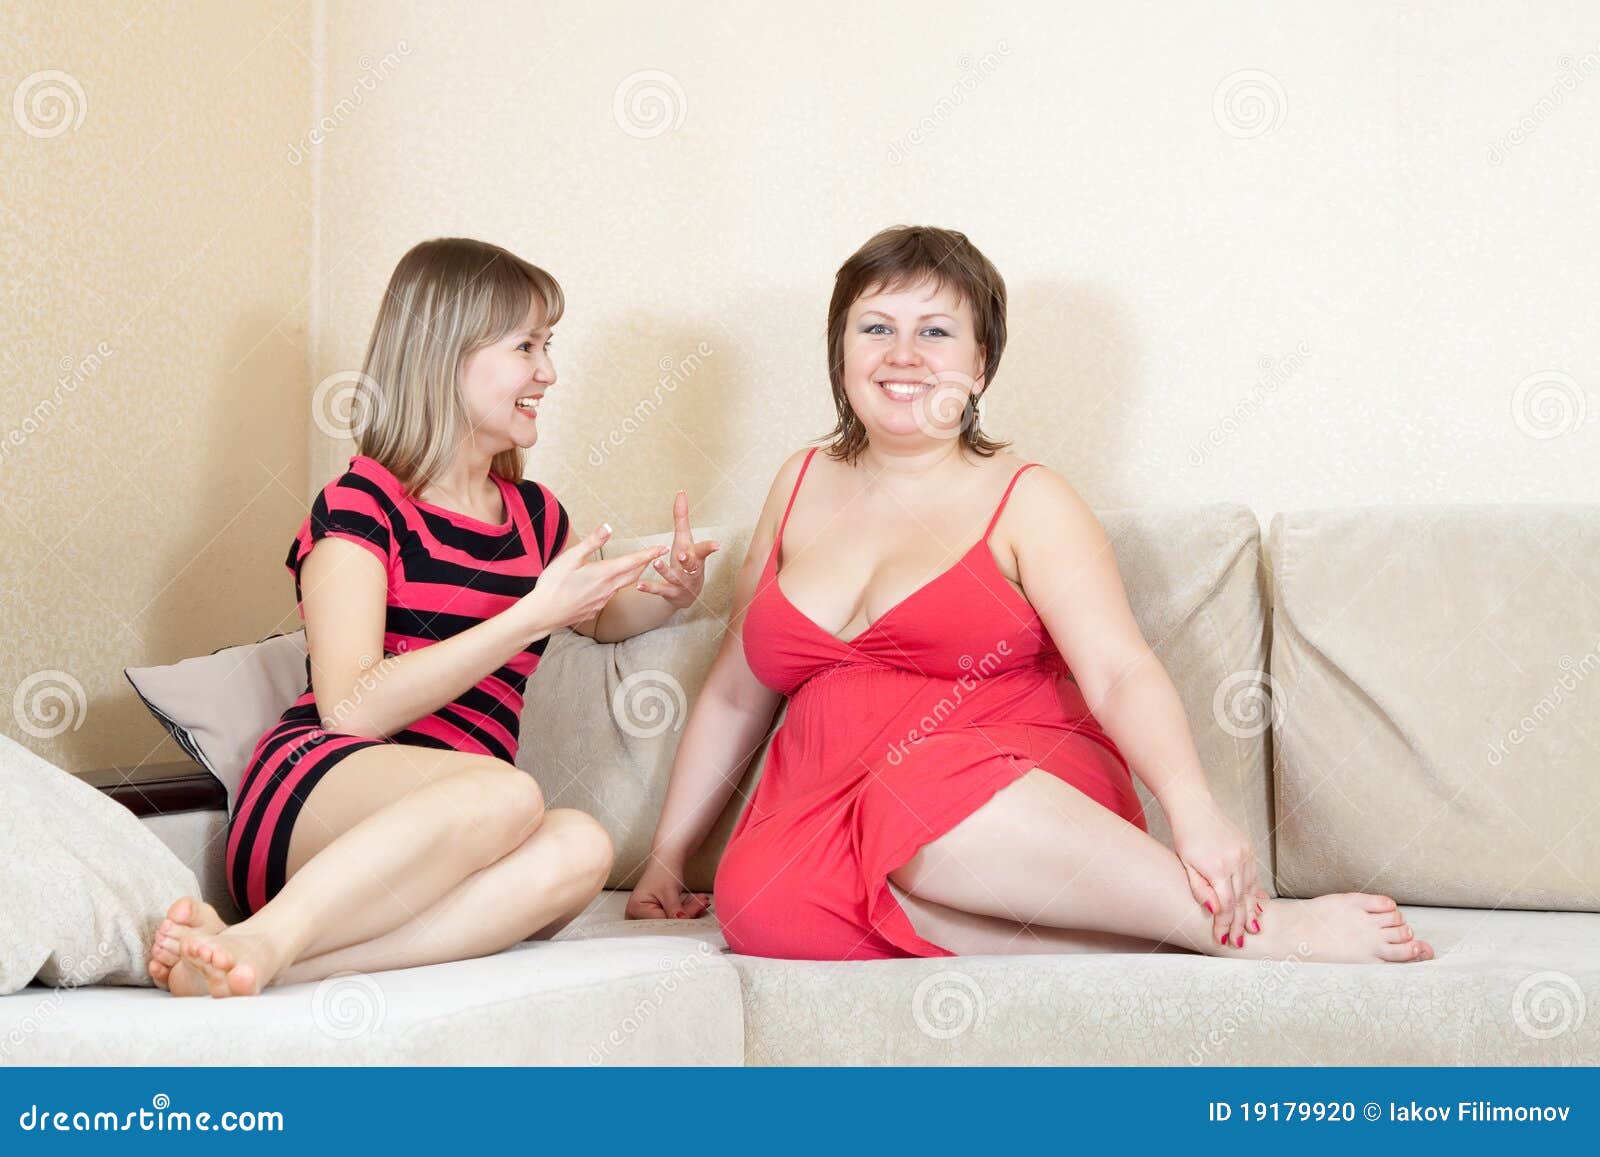 Русские тетки заставляют. Две девушки сидят на диване. Две женщины беседуют на диване. Две сестры на диване. Девочки сестренки на диване.